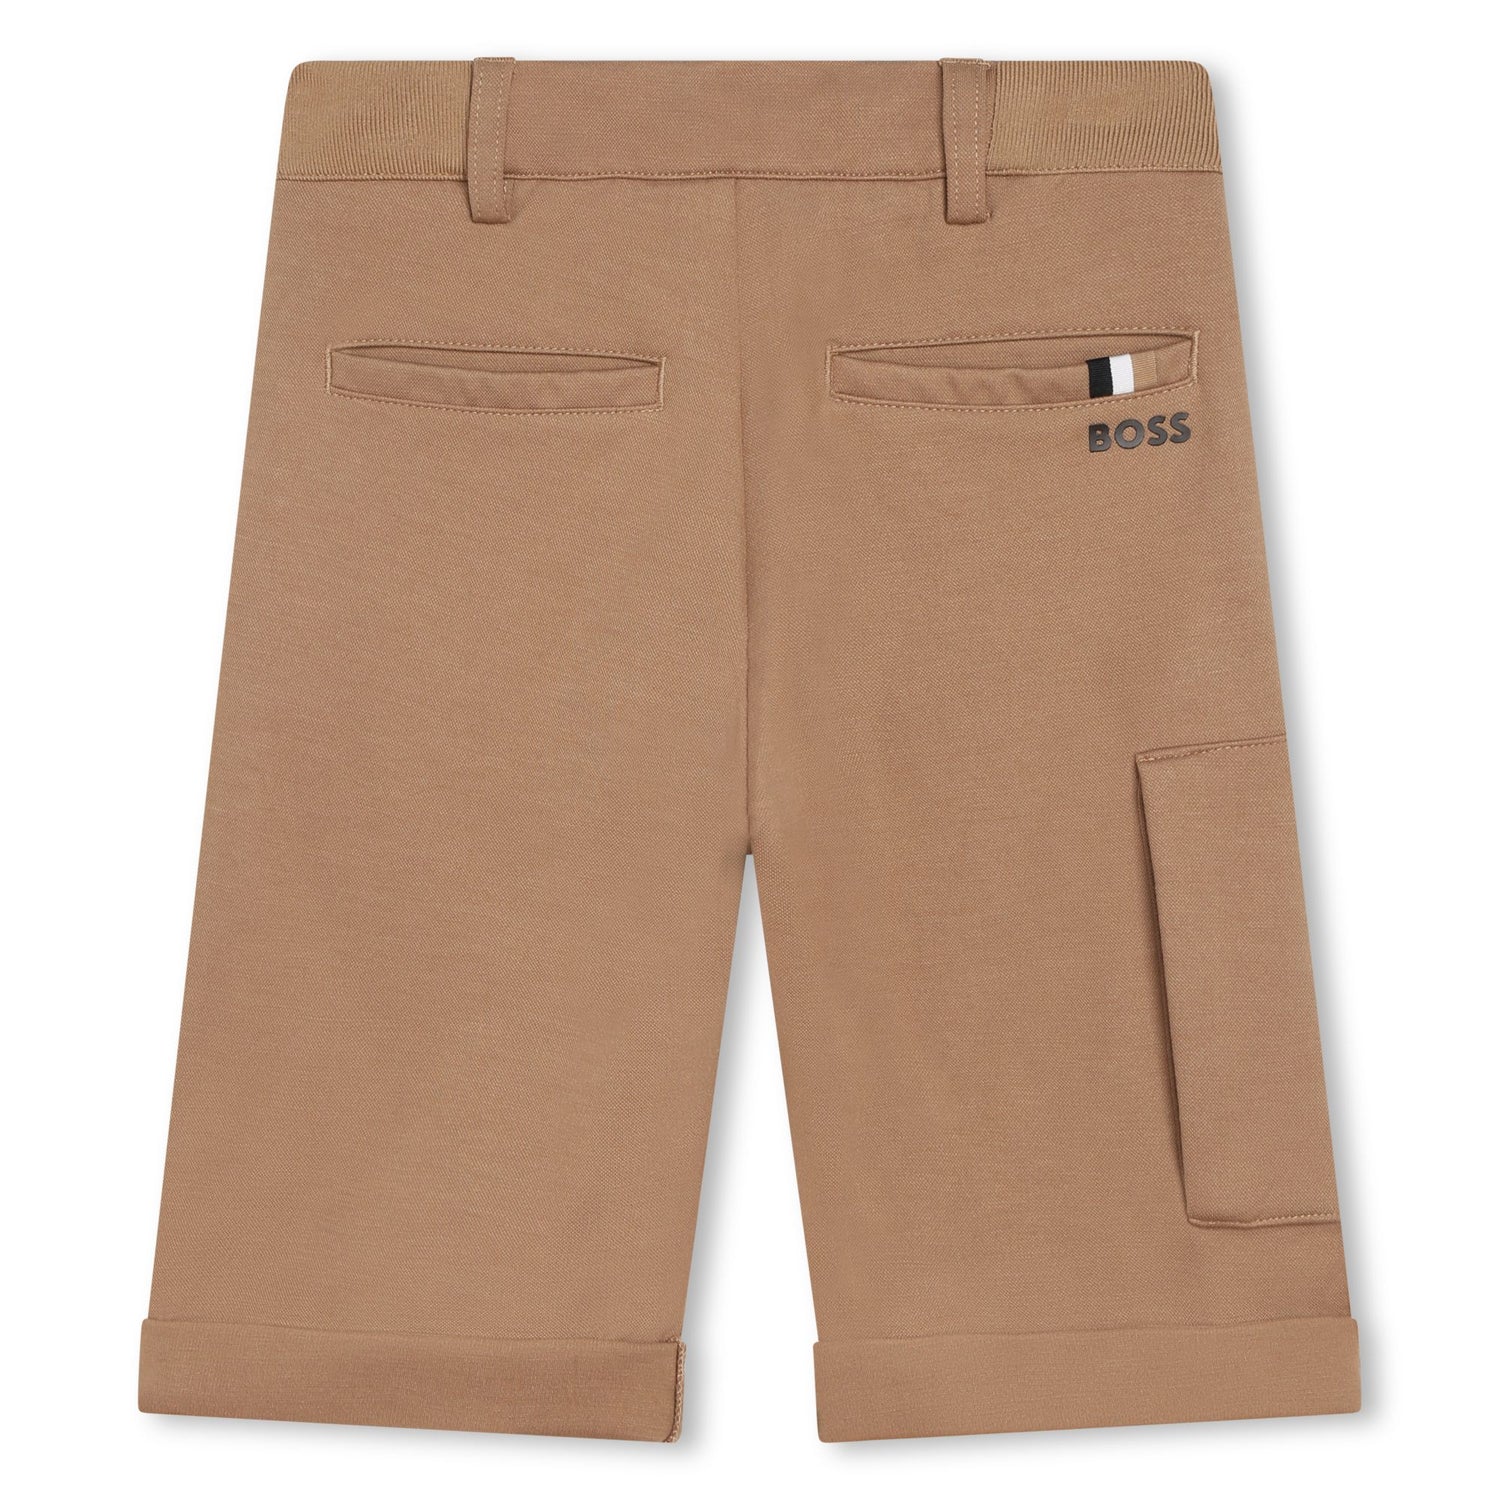 Hugo Boss Bermuda Shorts Style: J24817